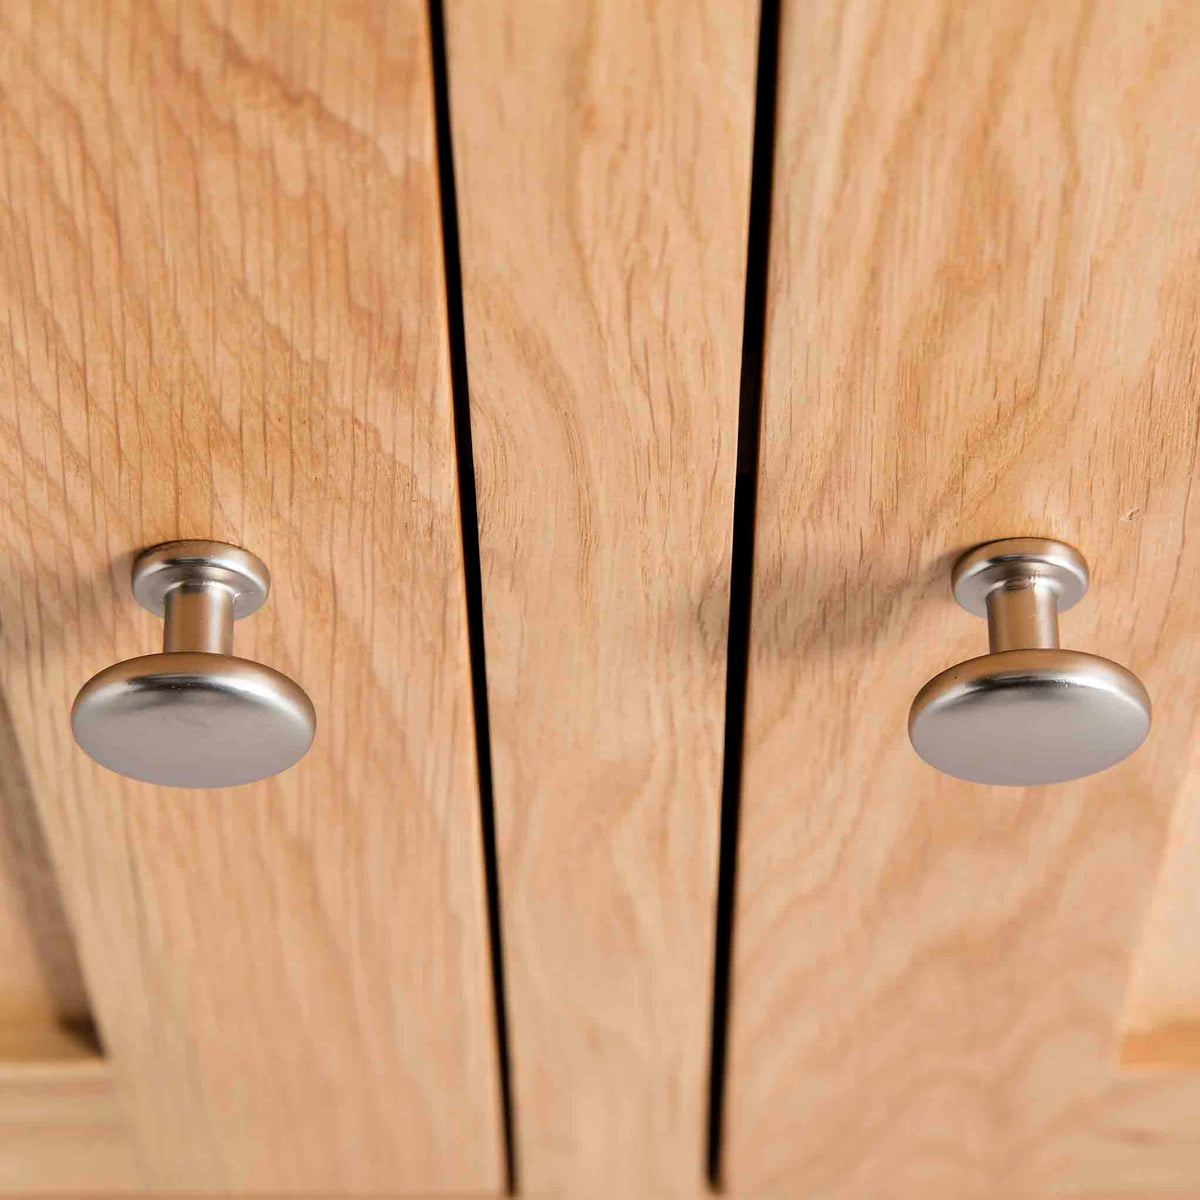 London Oak Mini Sideboard - Close up of cupboard door knobs